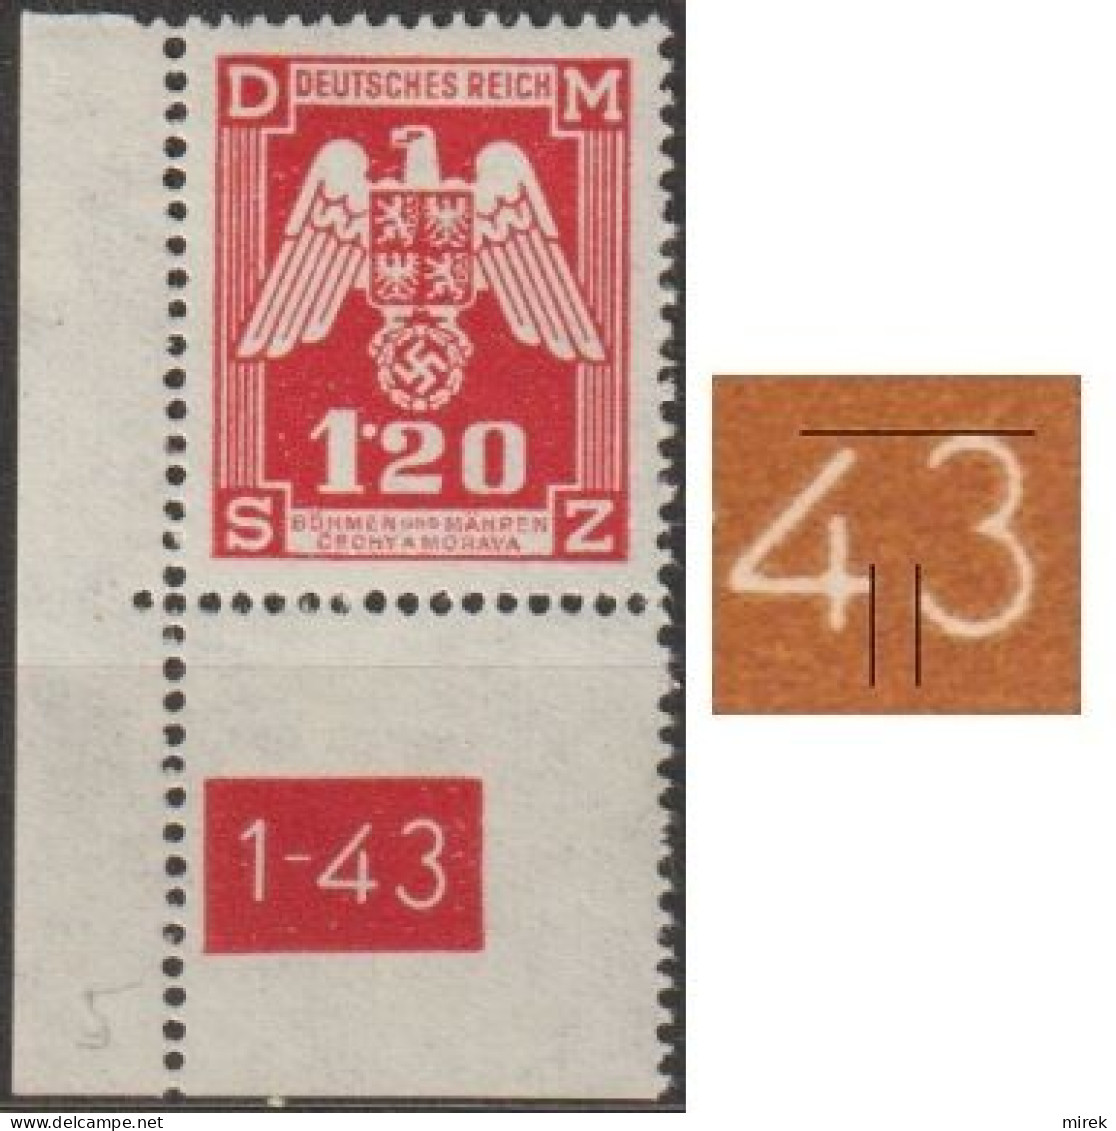 026/ Pof. SL 19, Corner Stamp, Plate Number 1-43, Type 2, Var. 5 - Unused Stamps